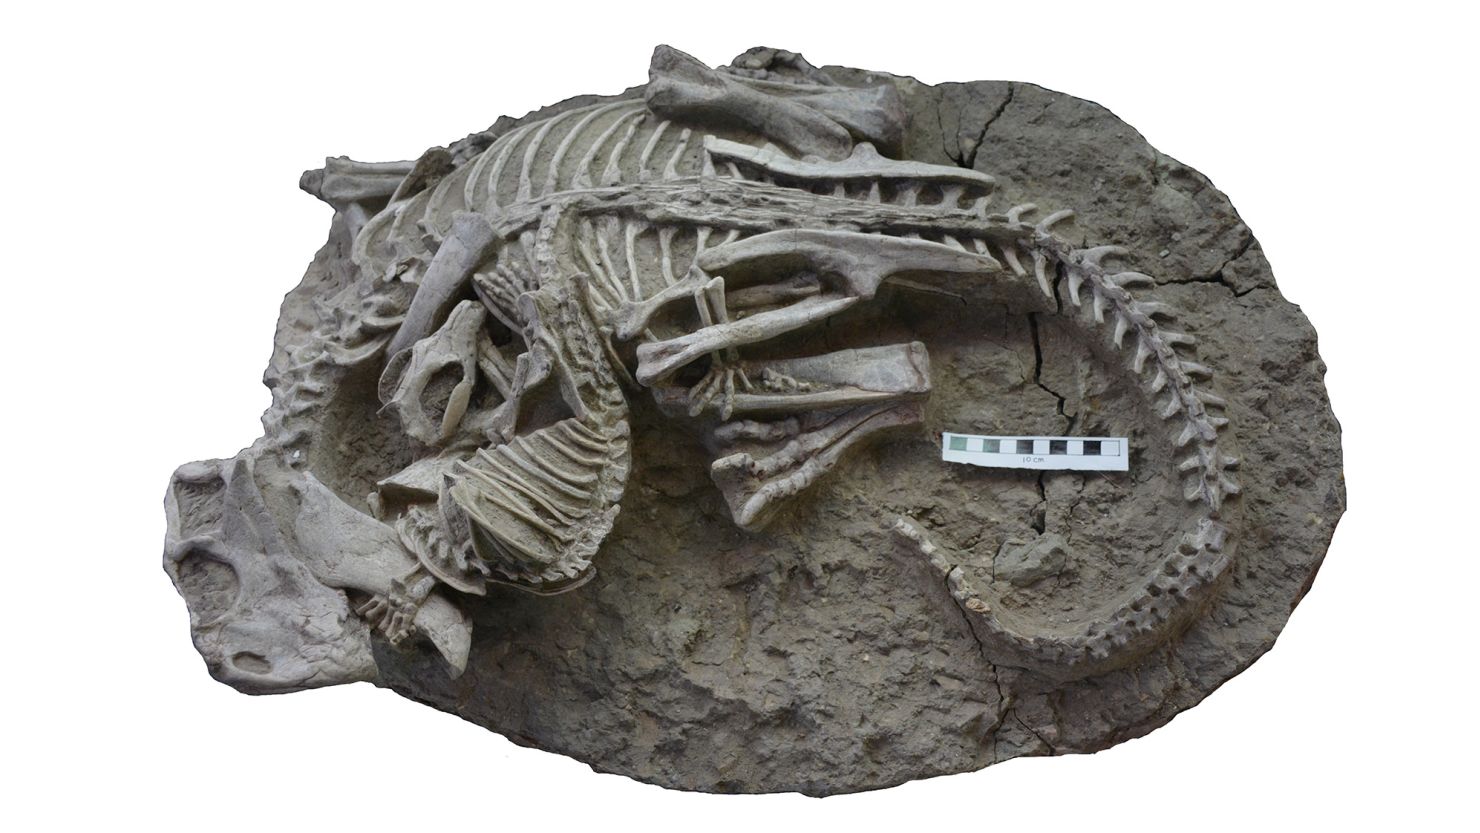 Entangled Psittacosaurus (dinosaur) and Repenomamus (mammal) skeletons. Scale bar equals 10 cm.